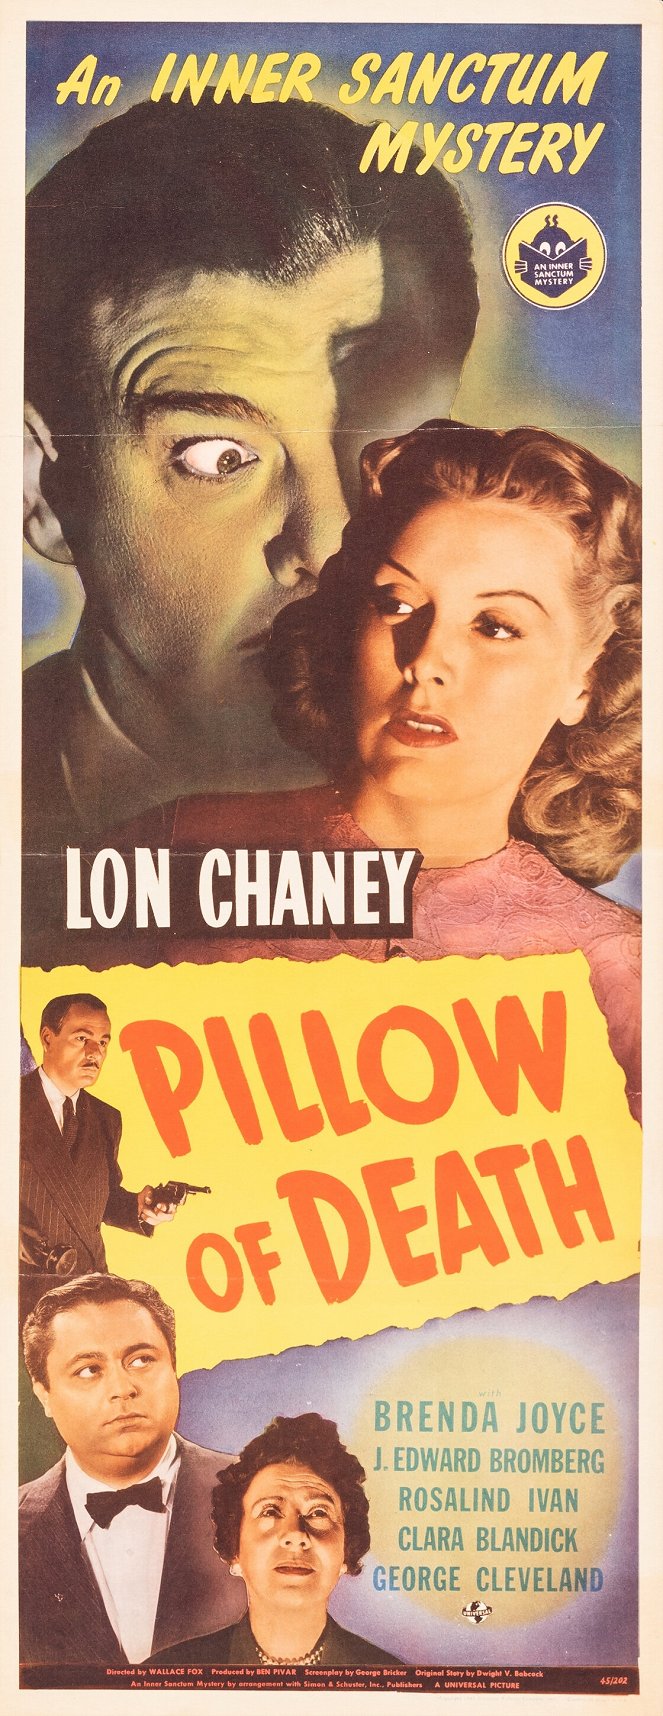 Pillow of Death - Plakáty